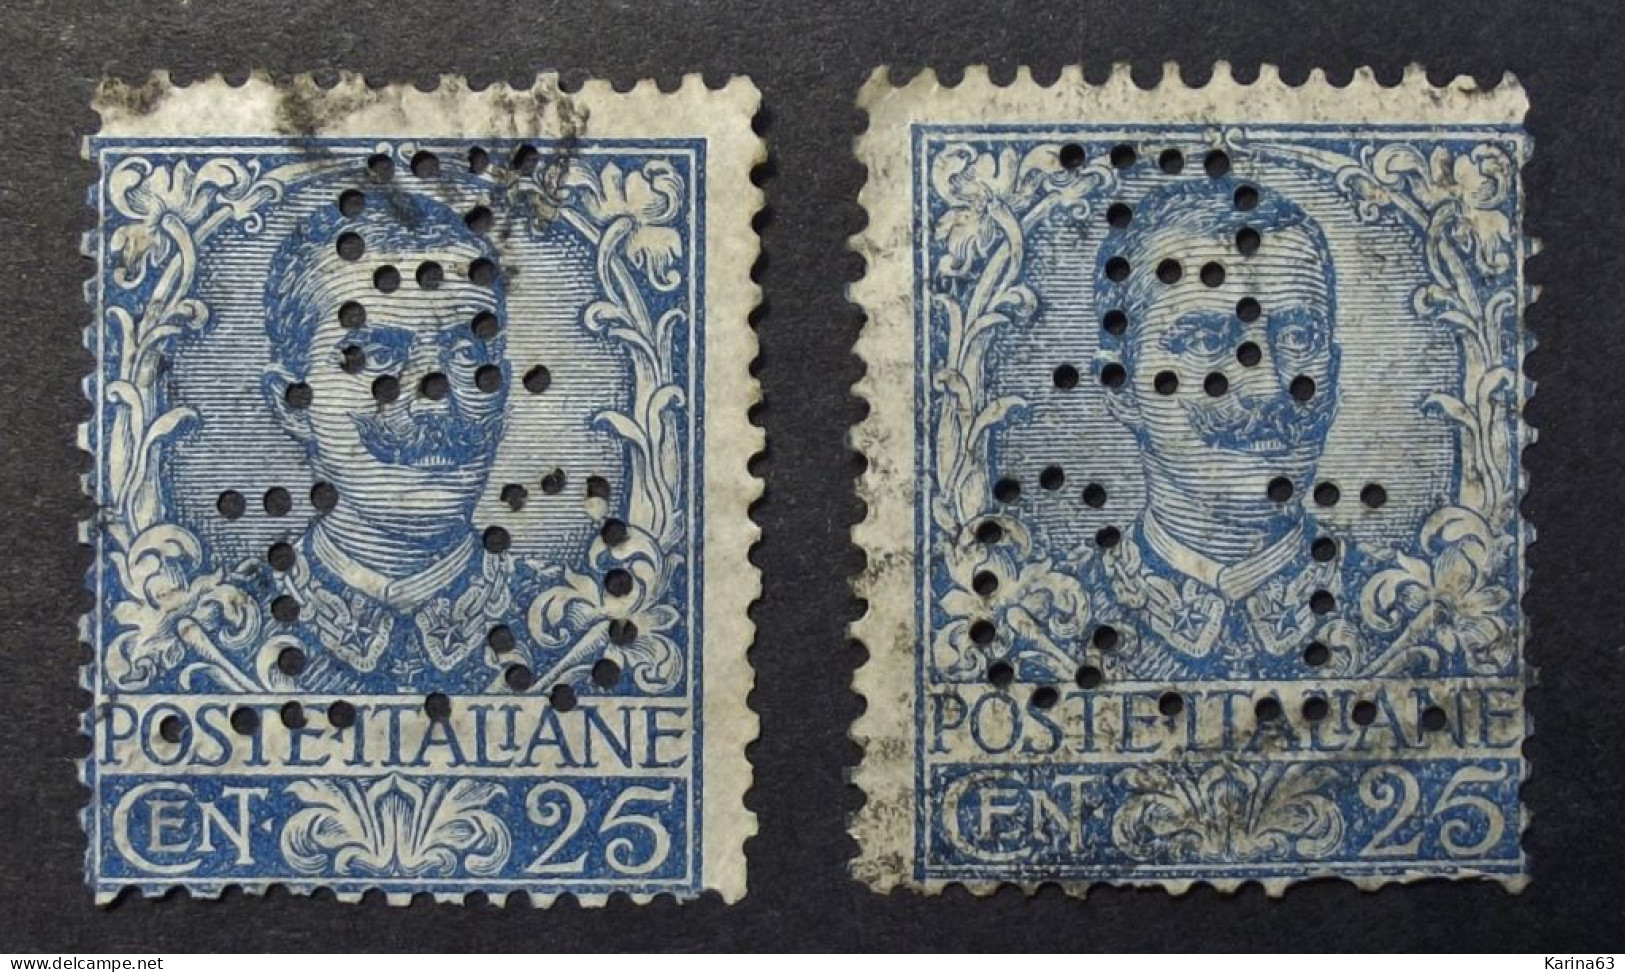 Italia - Italy - 1901  -  Perfin - Lochung -  B C I - Banco Commercial Italiana  -  Cancelled - Gebraucht